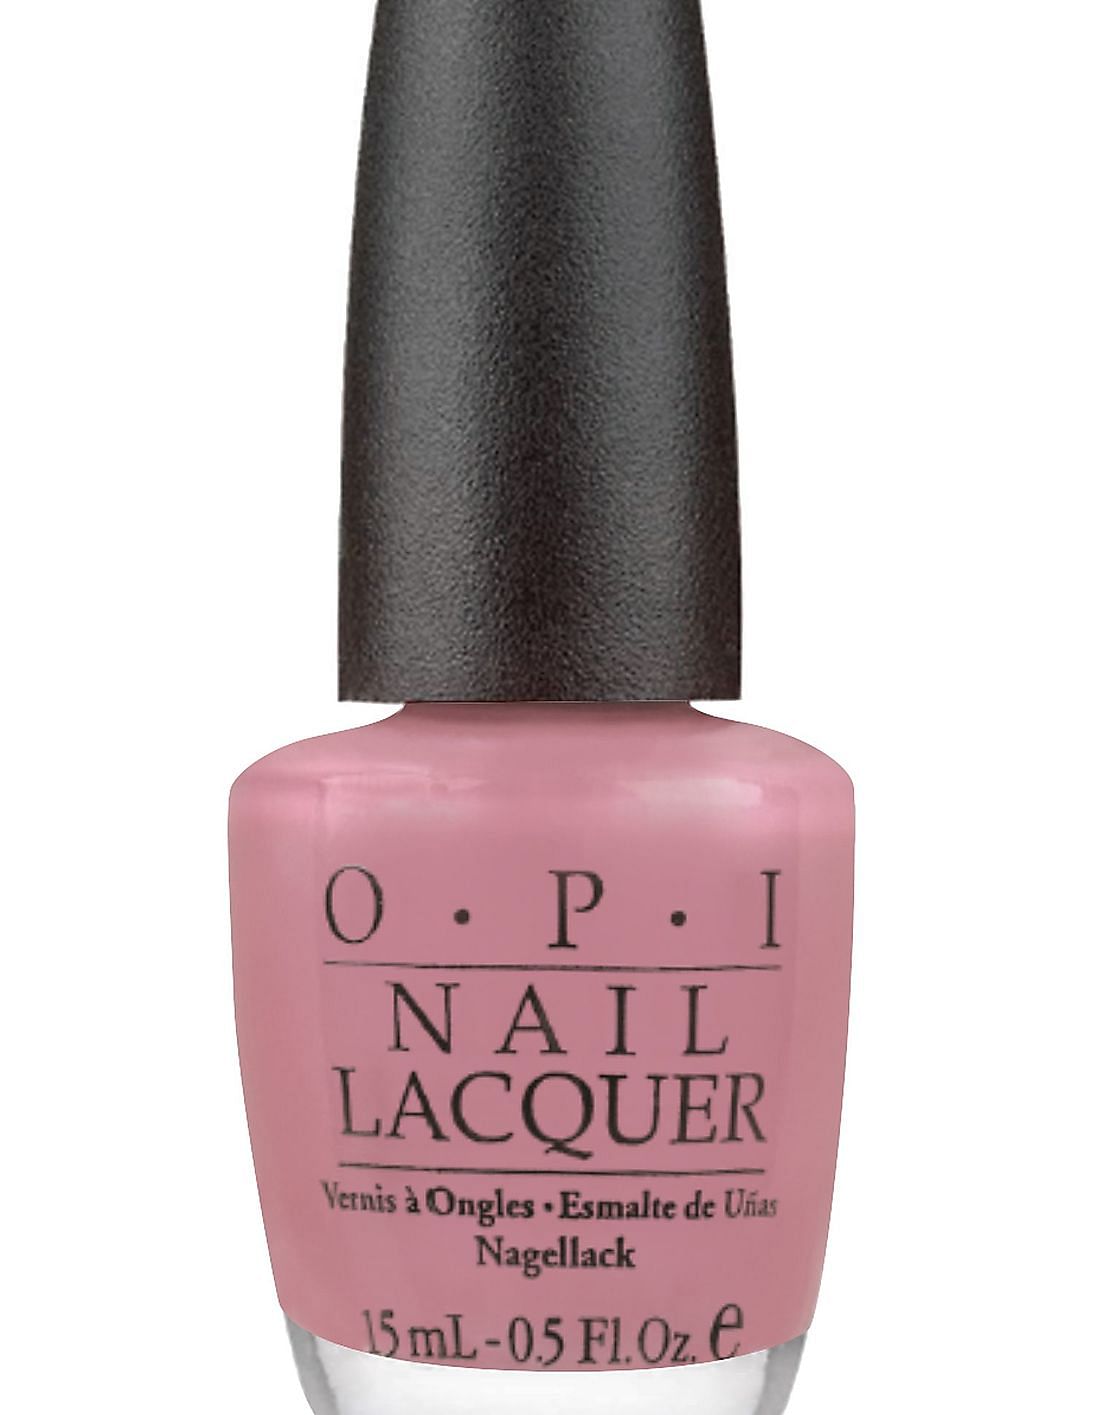 Pink Nail Polish with Creme Finish by PI Colors | Cupcake.400 | eBay